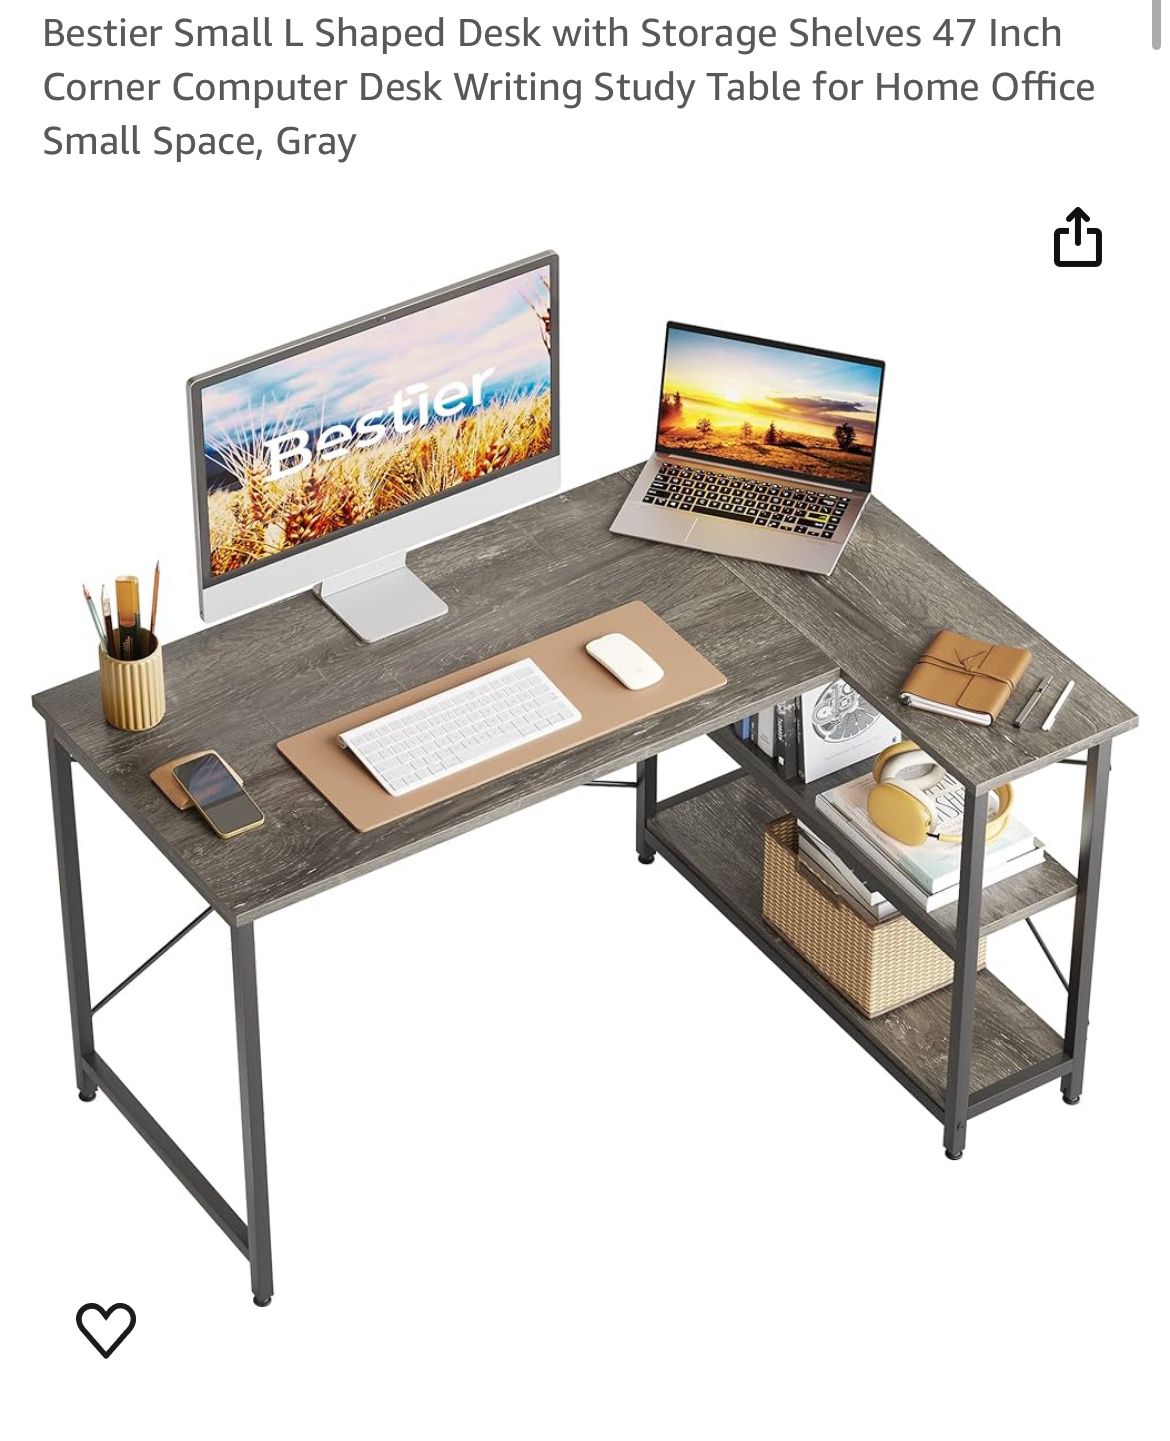 Small L shaped desk w/ shelves